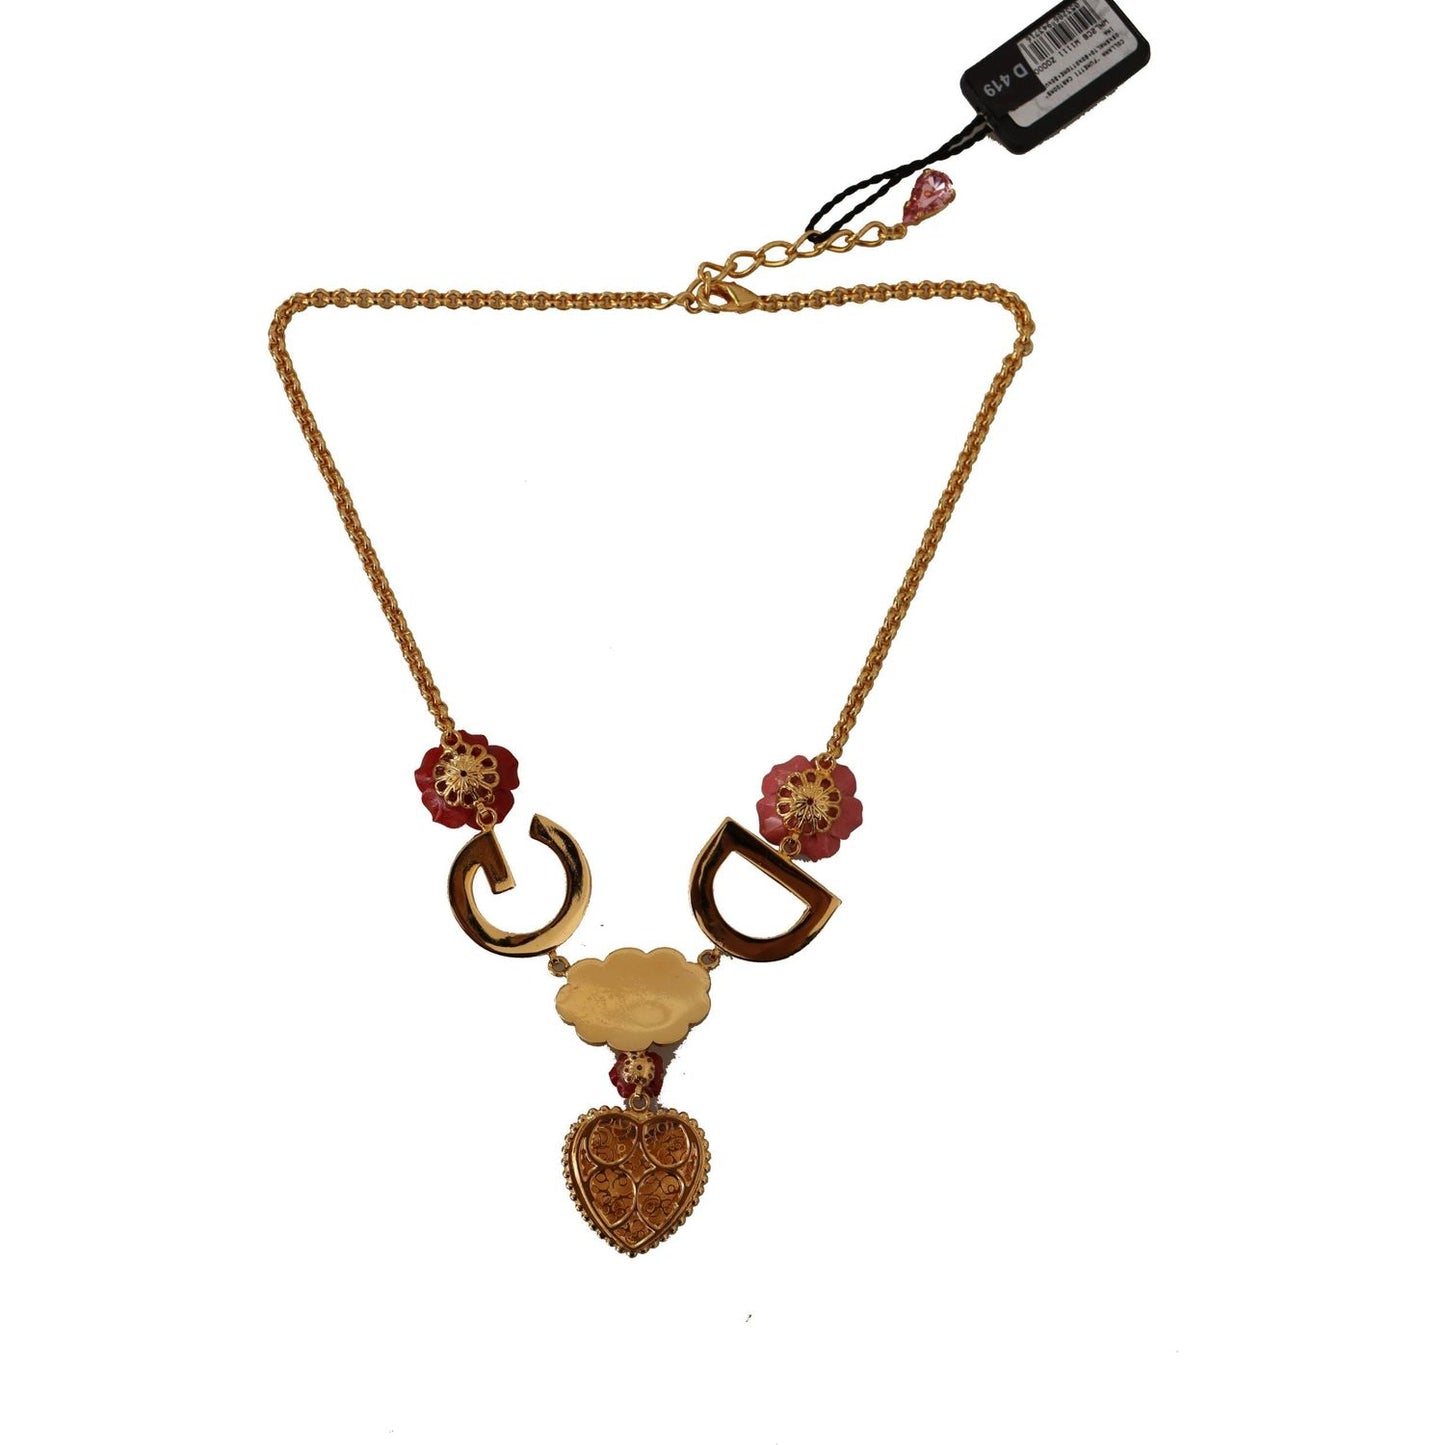 Dolce & Gabbana Glamorous Gold Crystal Charm Necklace WOMAN NECKLACE gold-rose-love-crystal-charm-chain-necklace